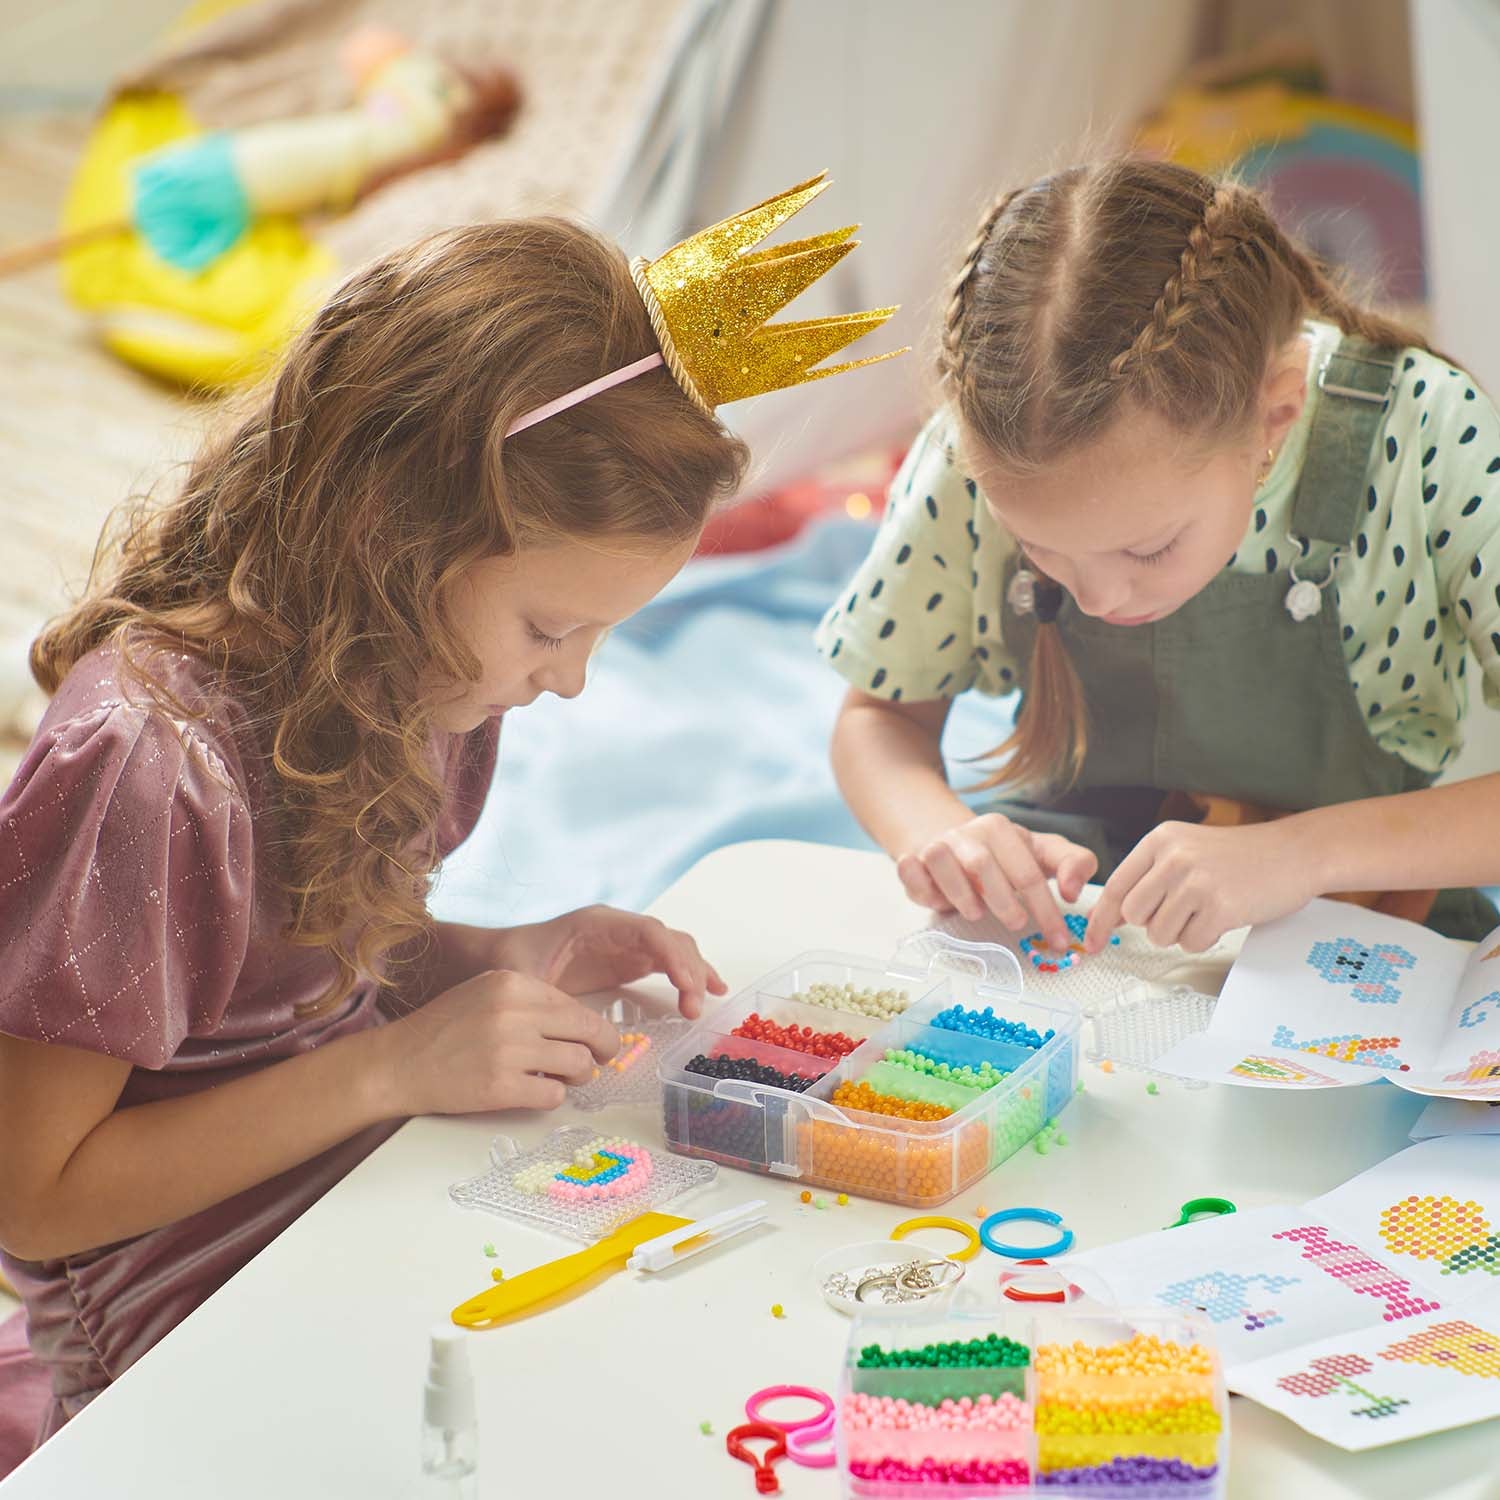 Perler H20 Water Fuse Beads Sweet Treats Kids Craft Activity Kit, 709 pcs -  Toys 4 U